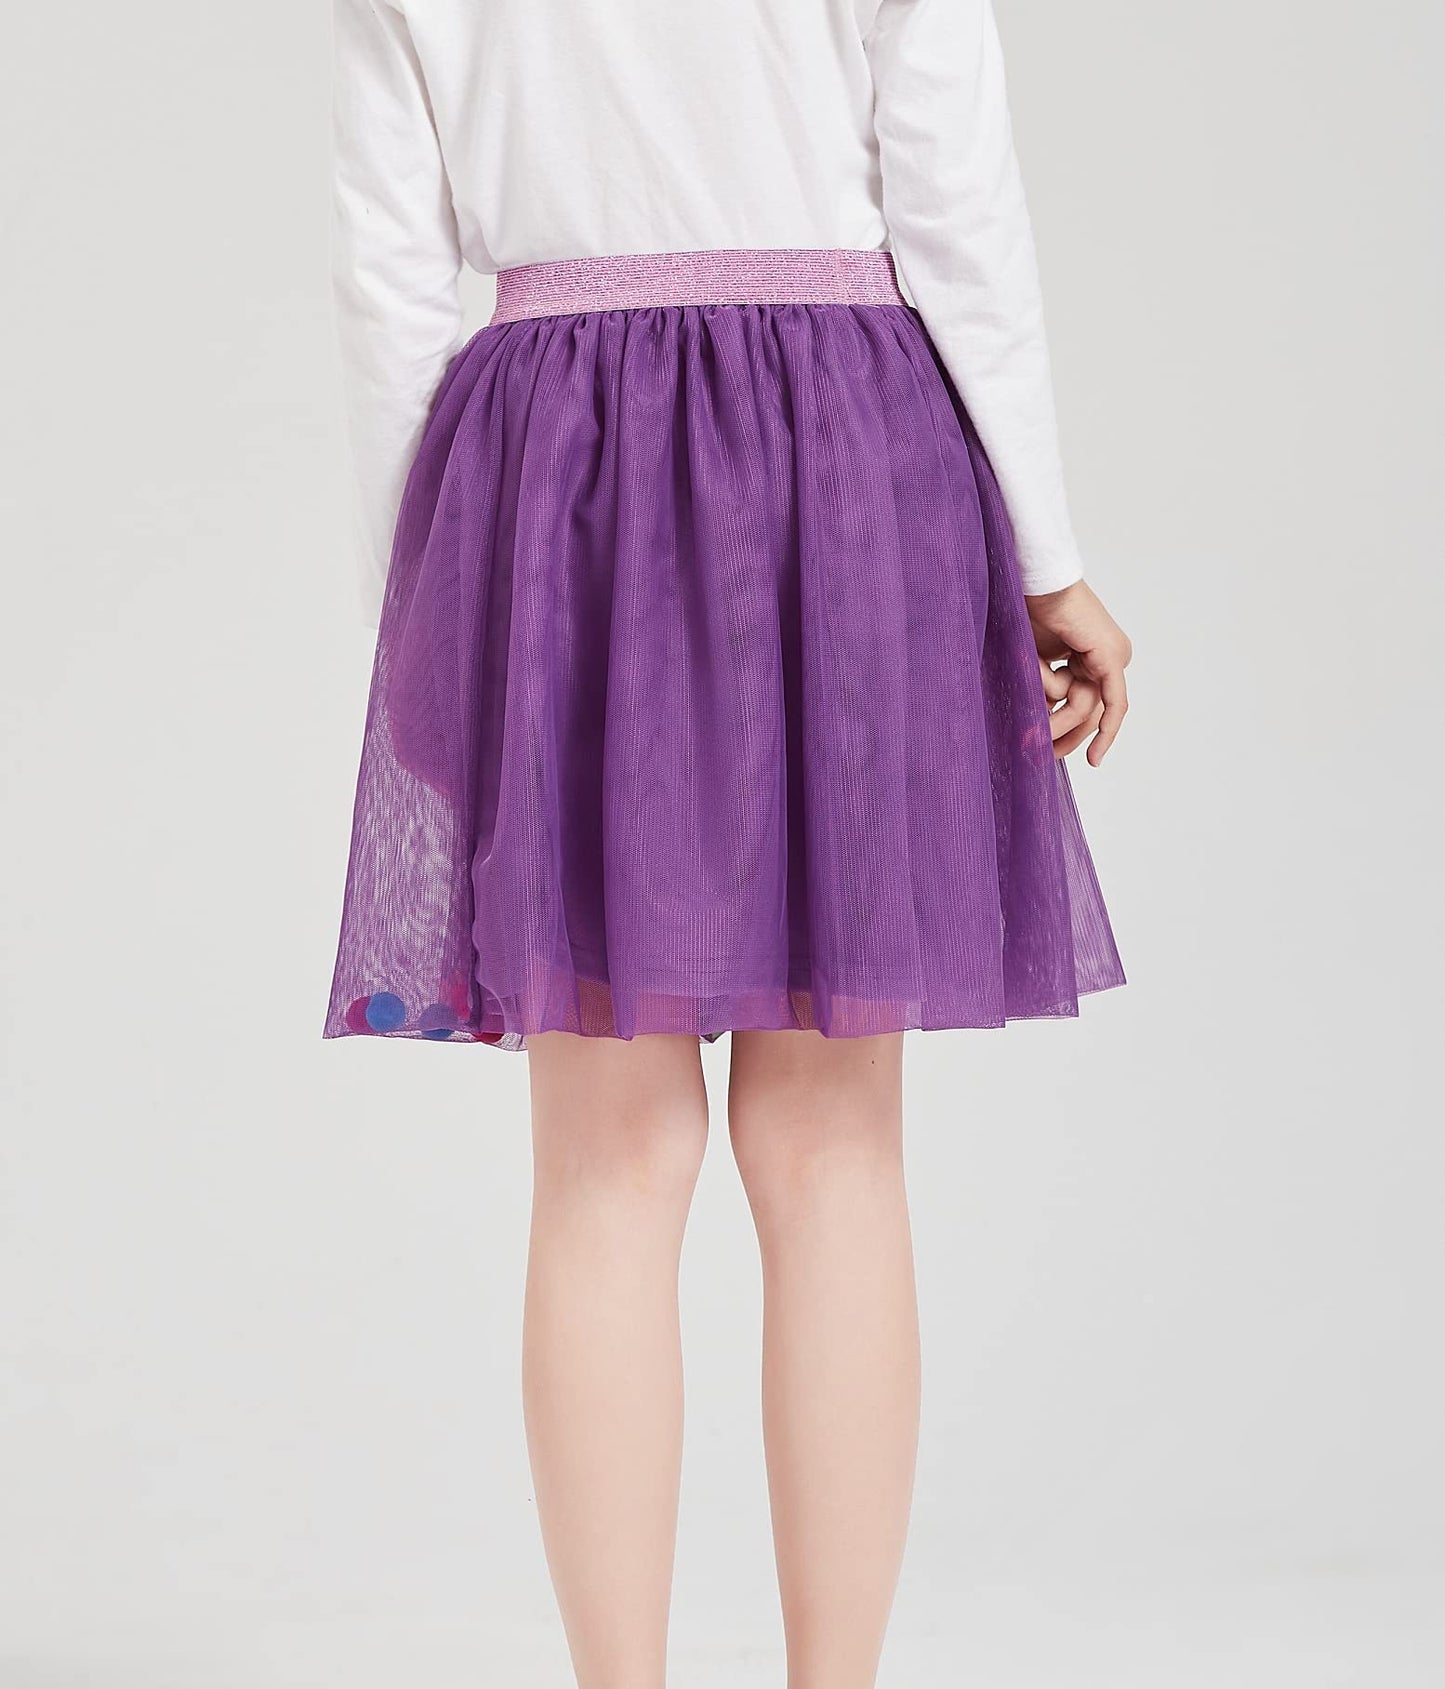 DaniChins Girl's Tutu Skirt Layered Tulle Princess Skirt with Pom Pom Puff Balls for Little Girls 8 Years